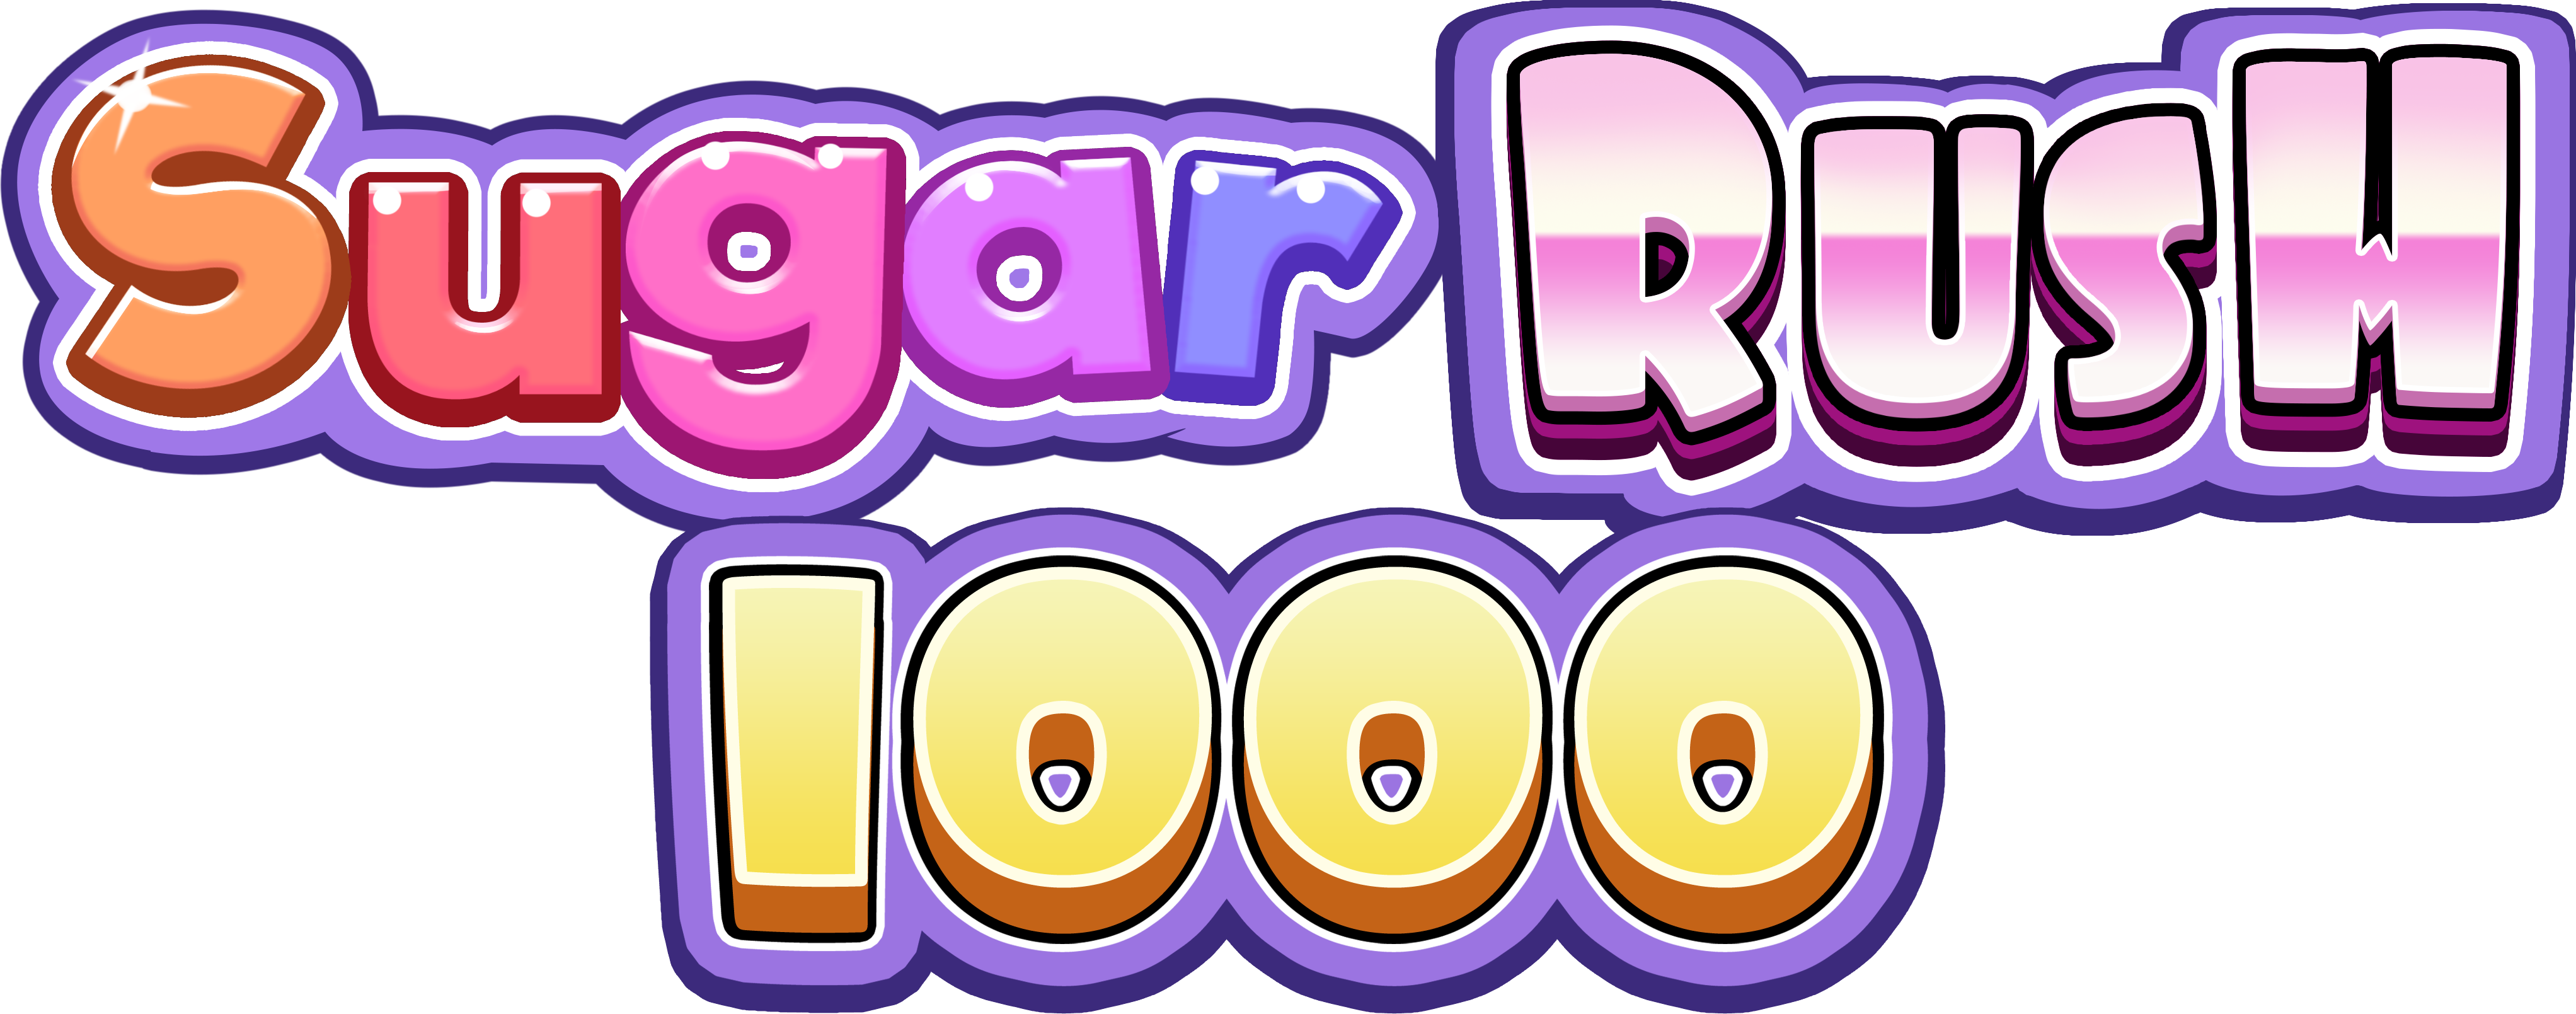 sugarrush1000-logo